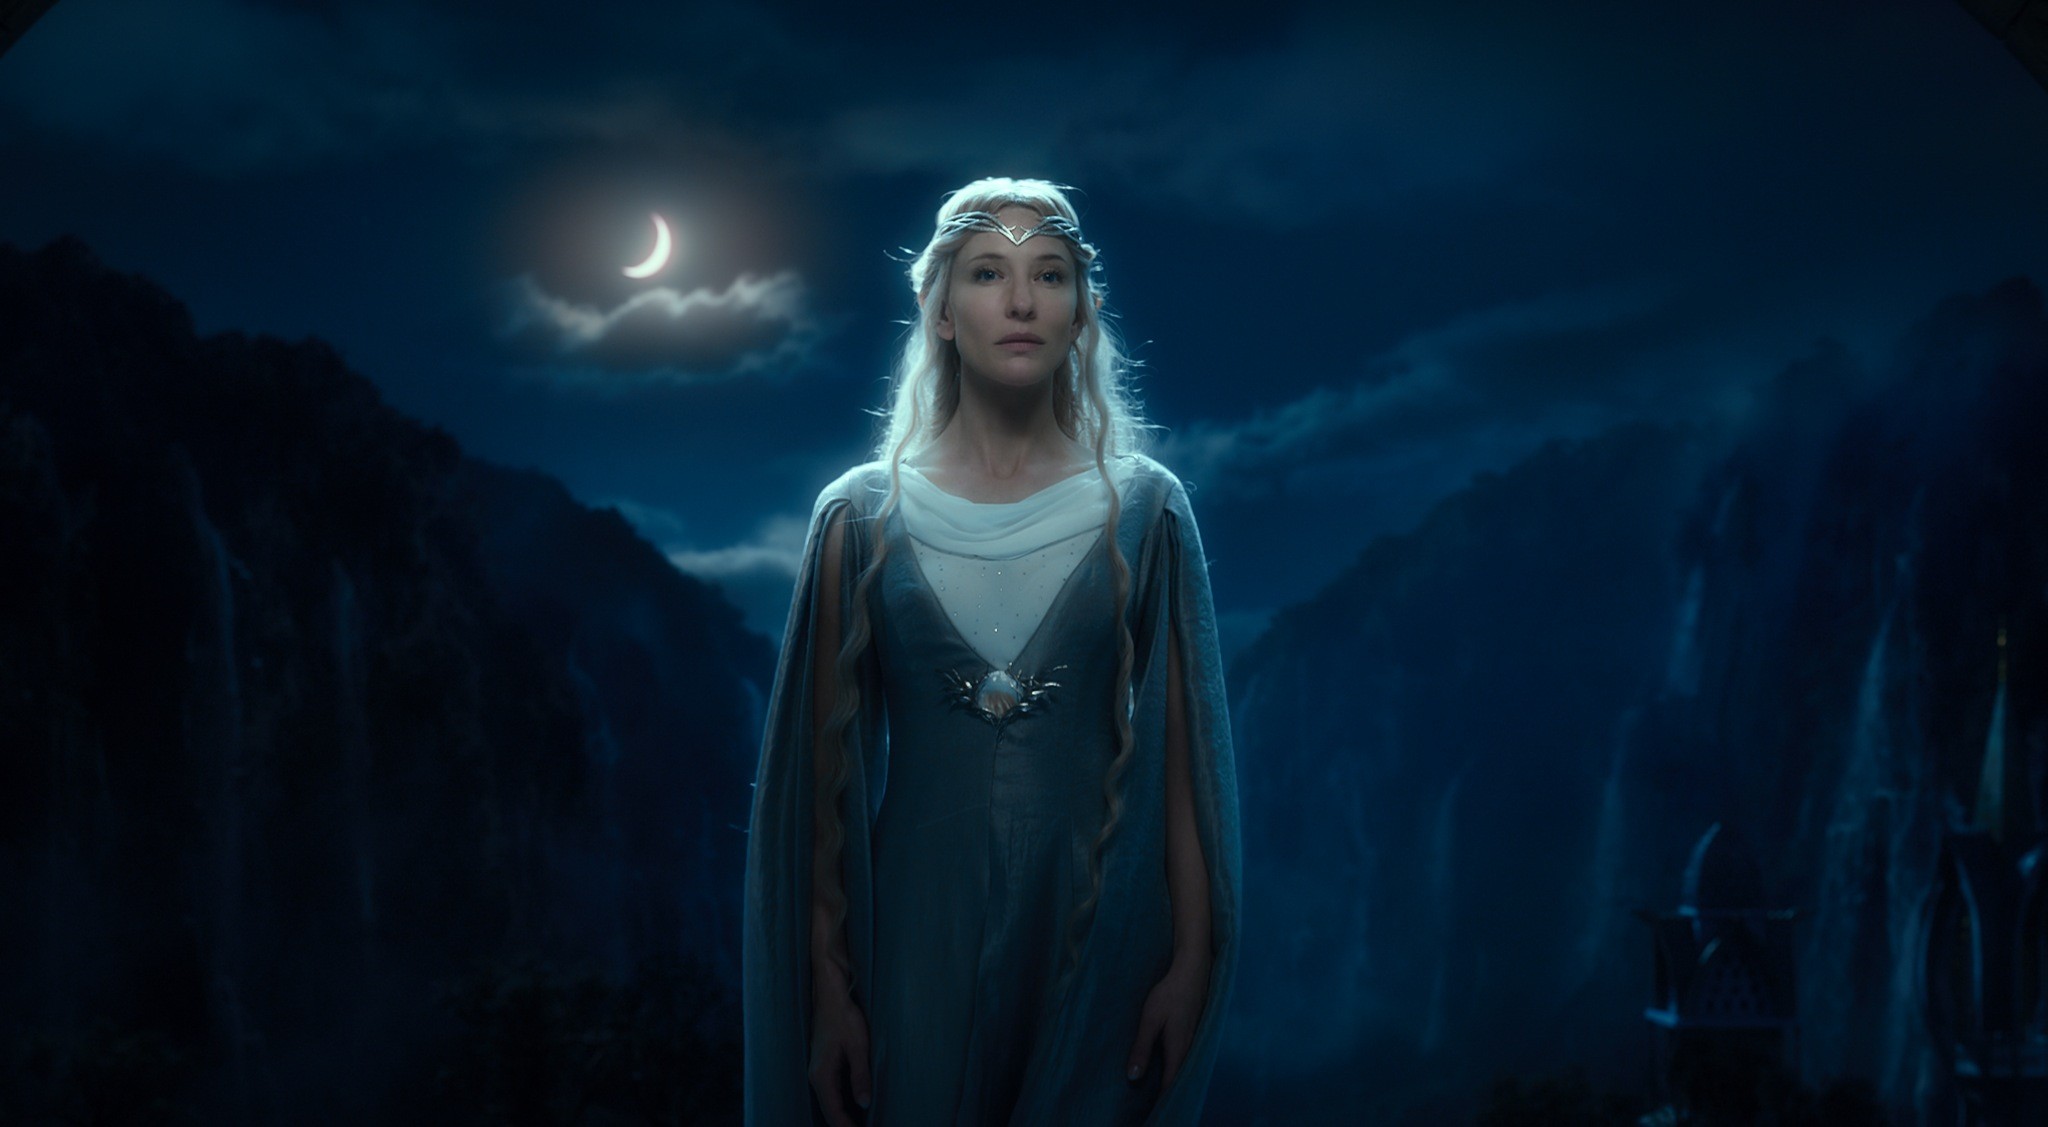 People 2048x1127 fantasy art Cate Blanchett movies women Galadriel The Hobbit: The Desolation of Smaug actress film stills Moon fantasy girl blonde